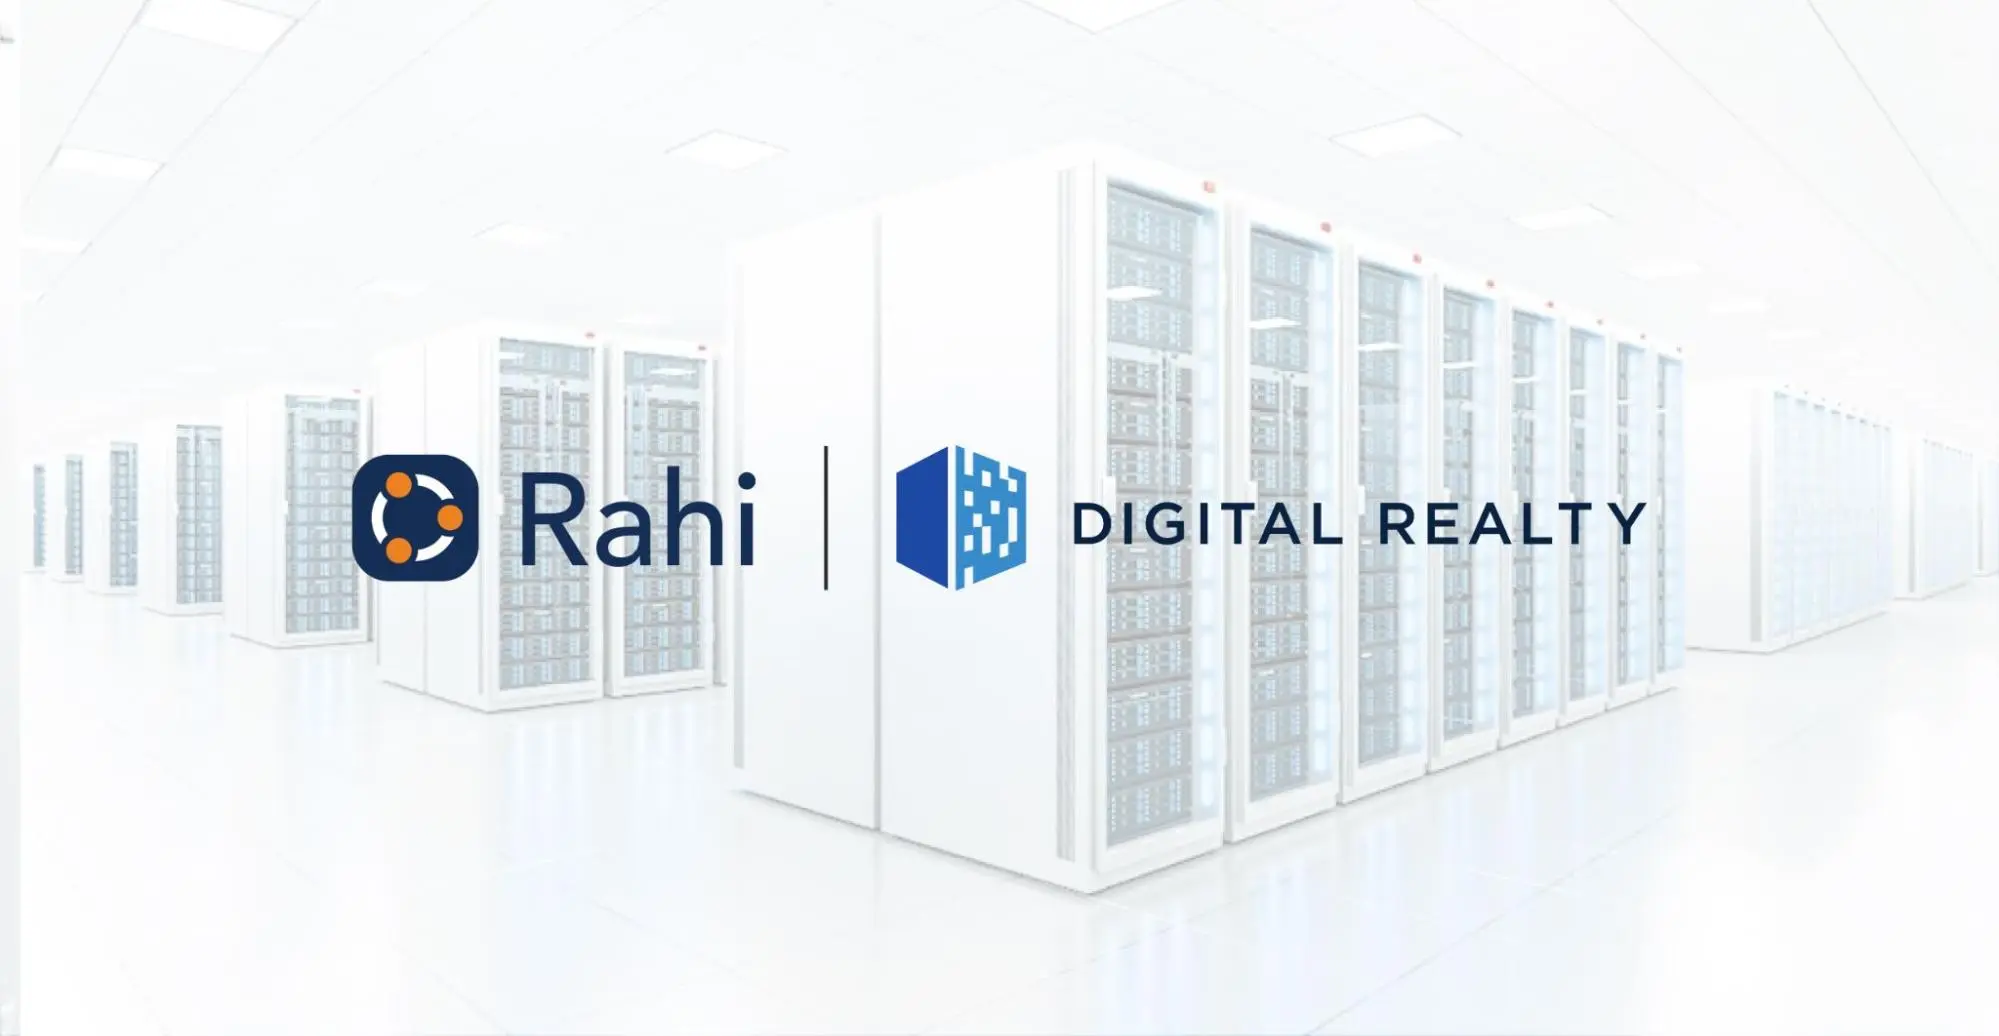 rahi and digital realty